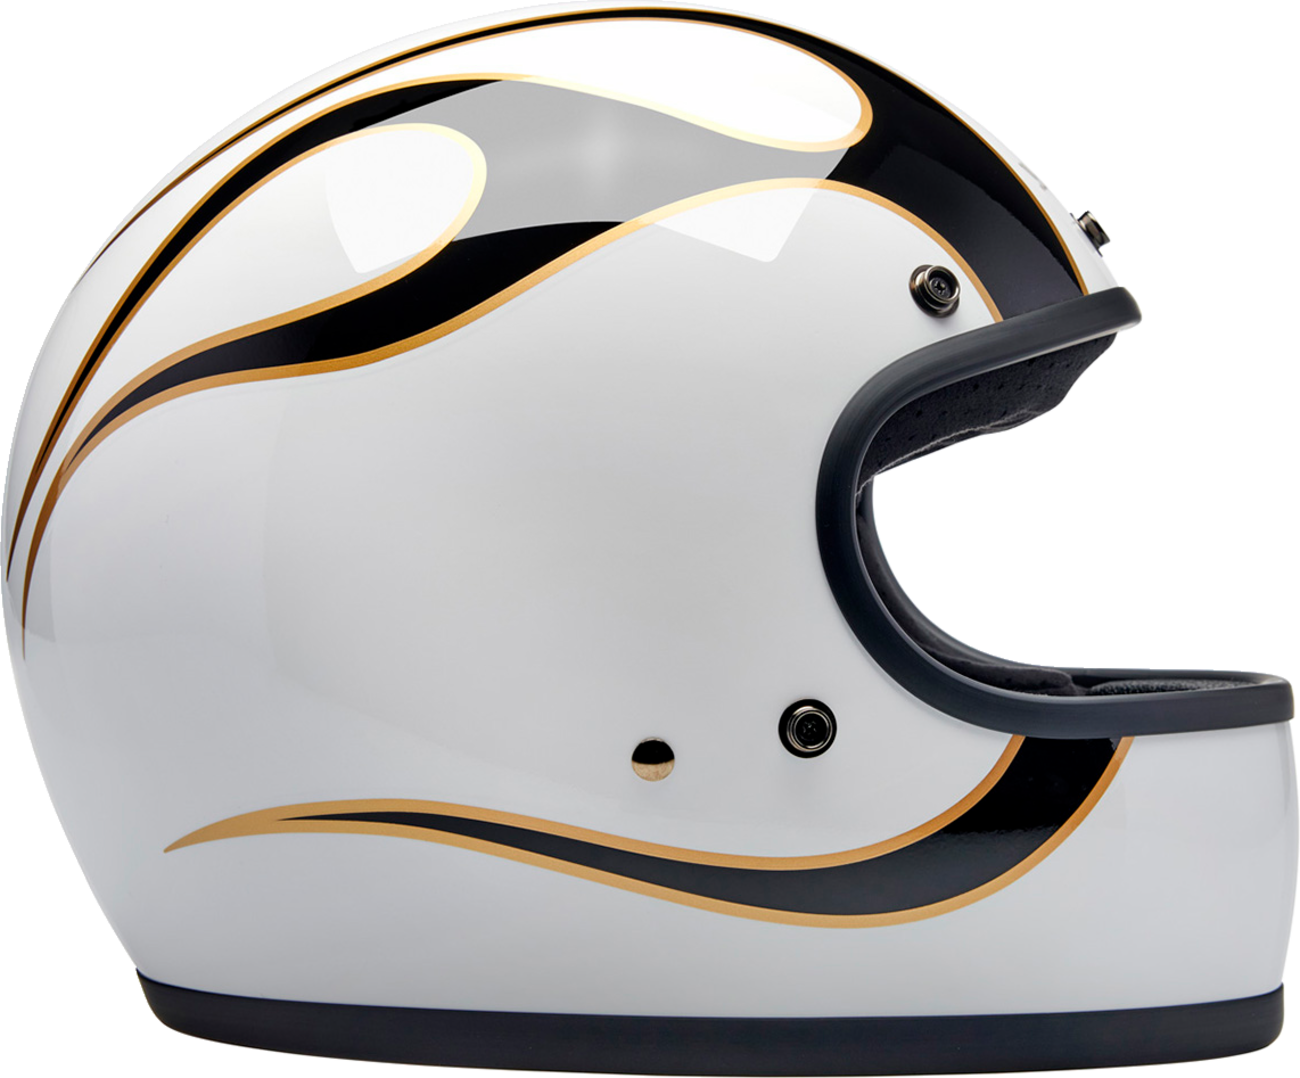 BILTWELL Gringo Helmet - Flames - White/Black - 2XL 1002-561-506